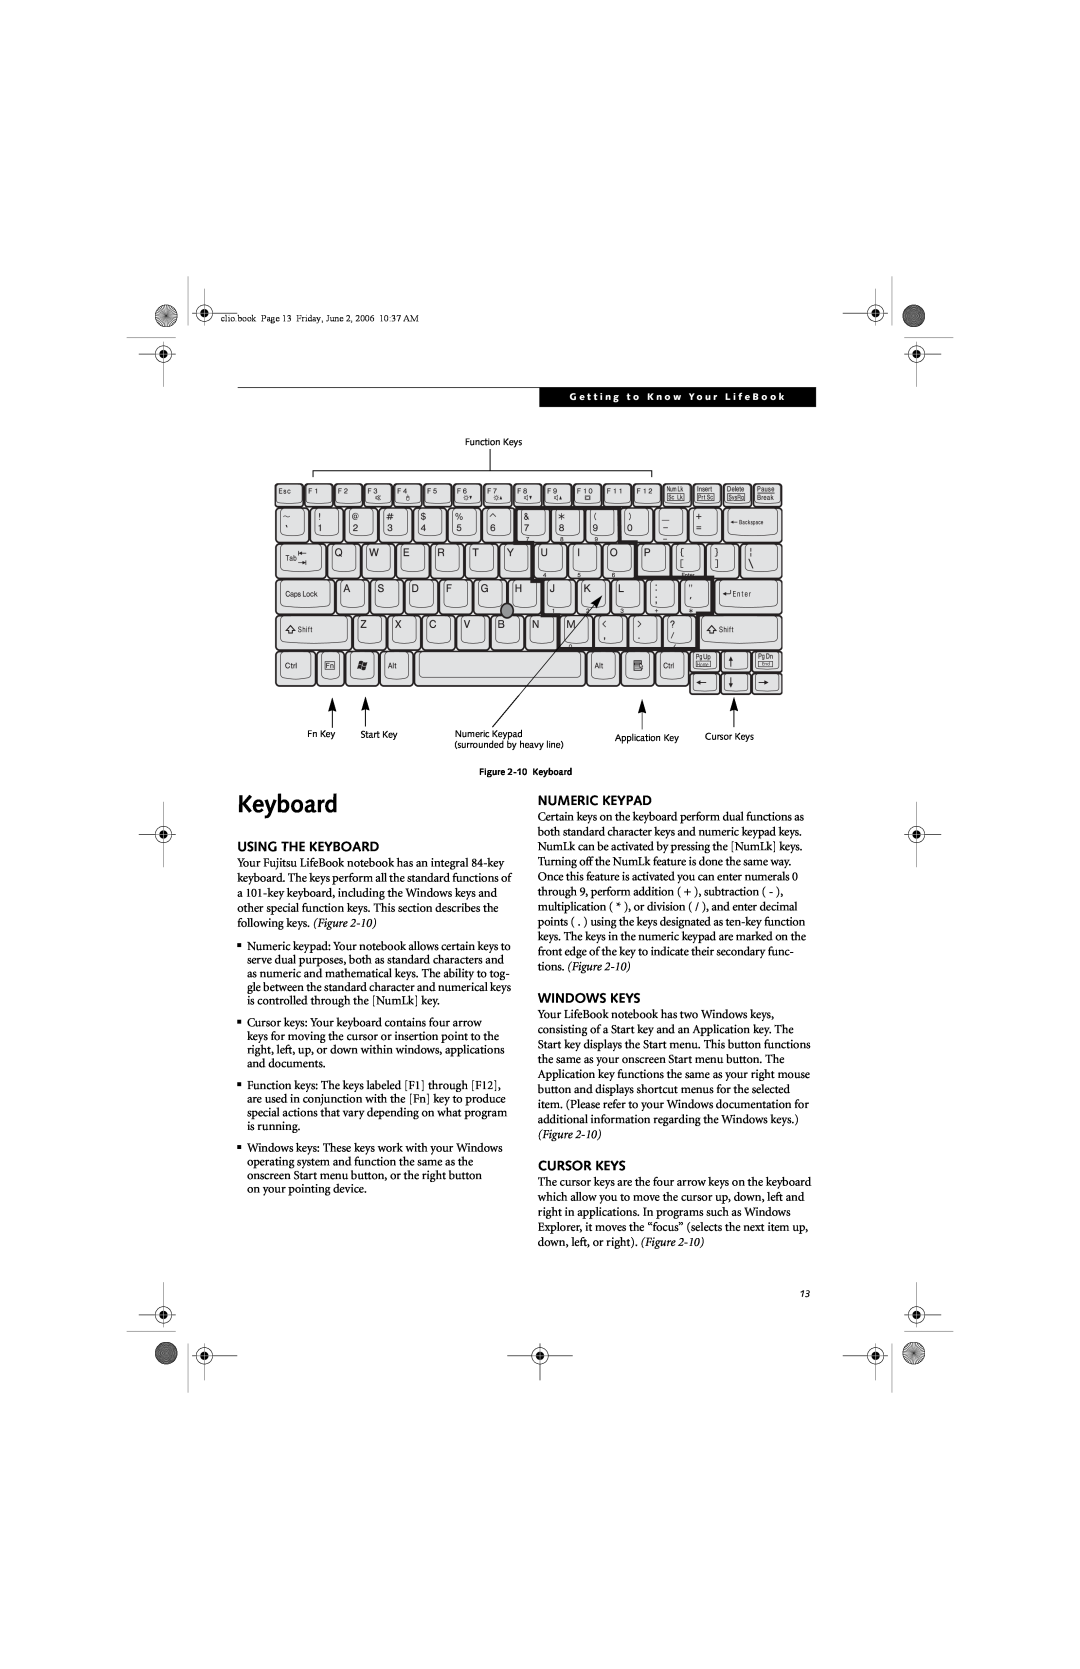 Fujitsu C1410 manual Using The Keyboard, Numeric Keypad, Windows Keys, Cursor Keys 